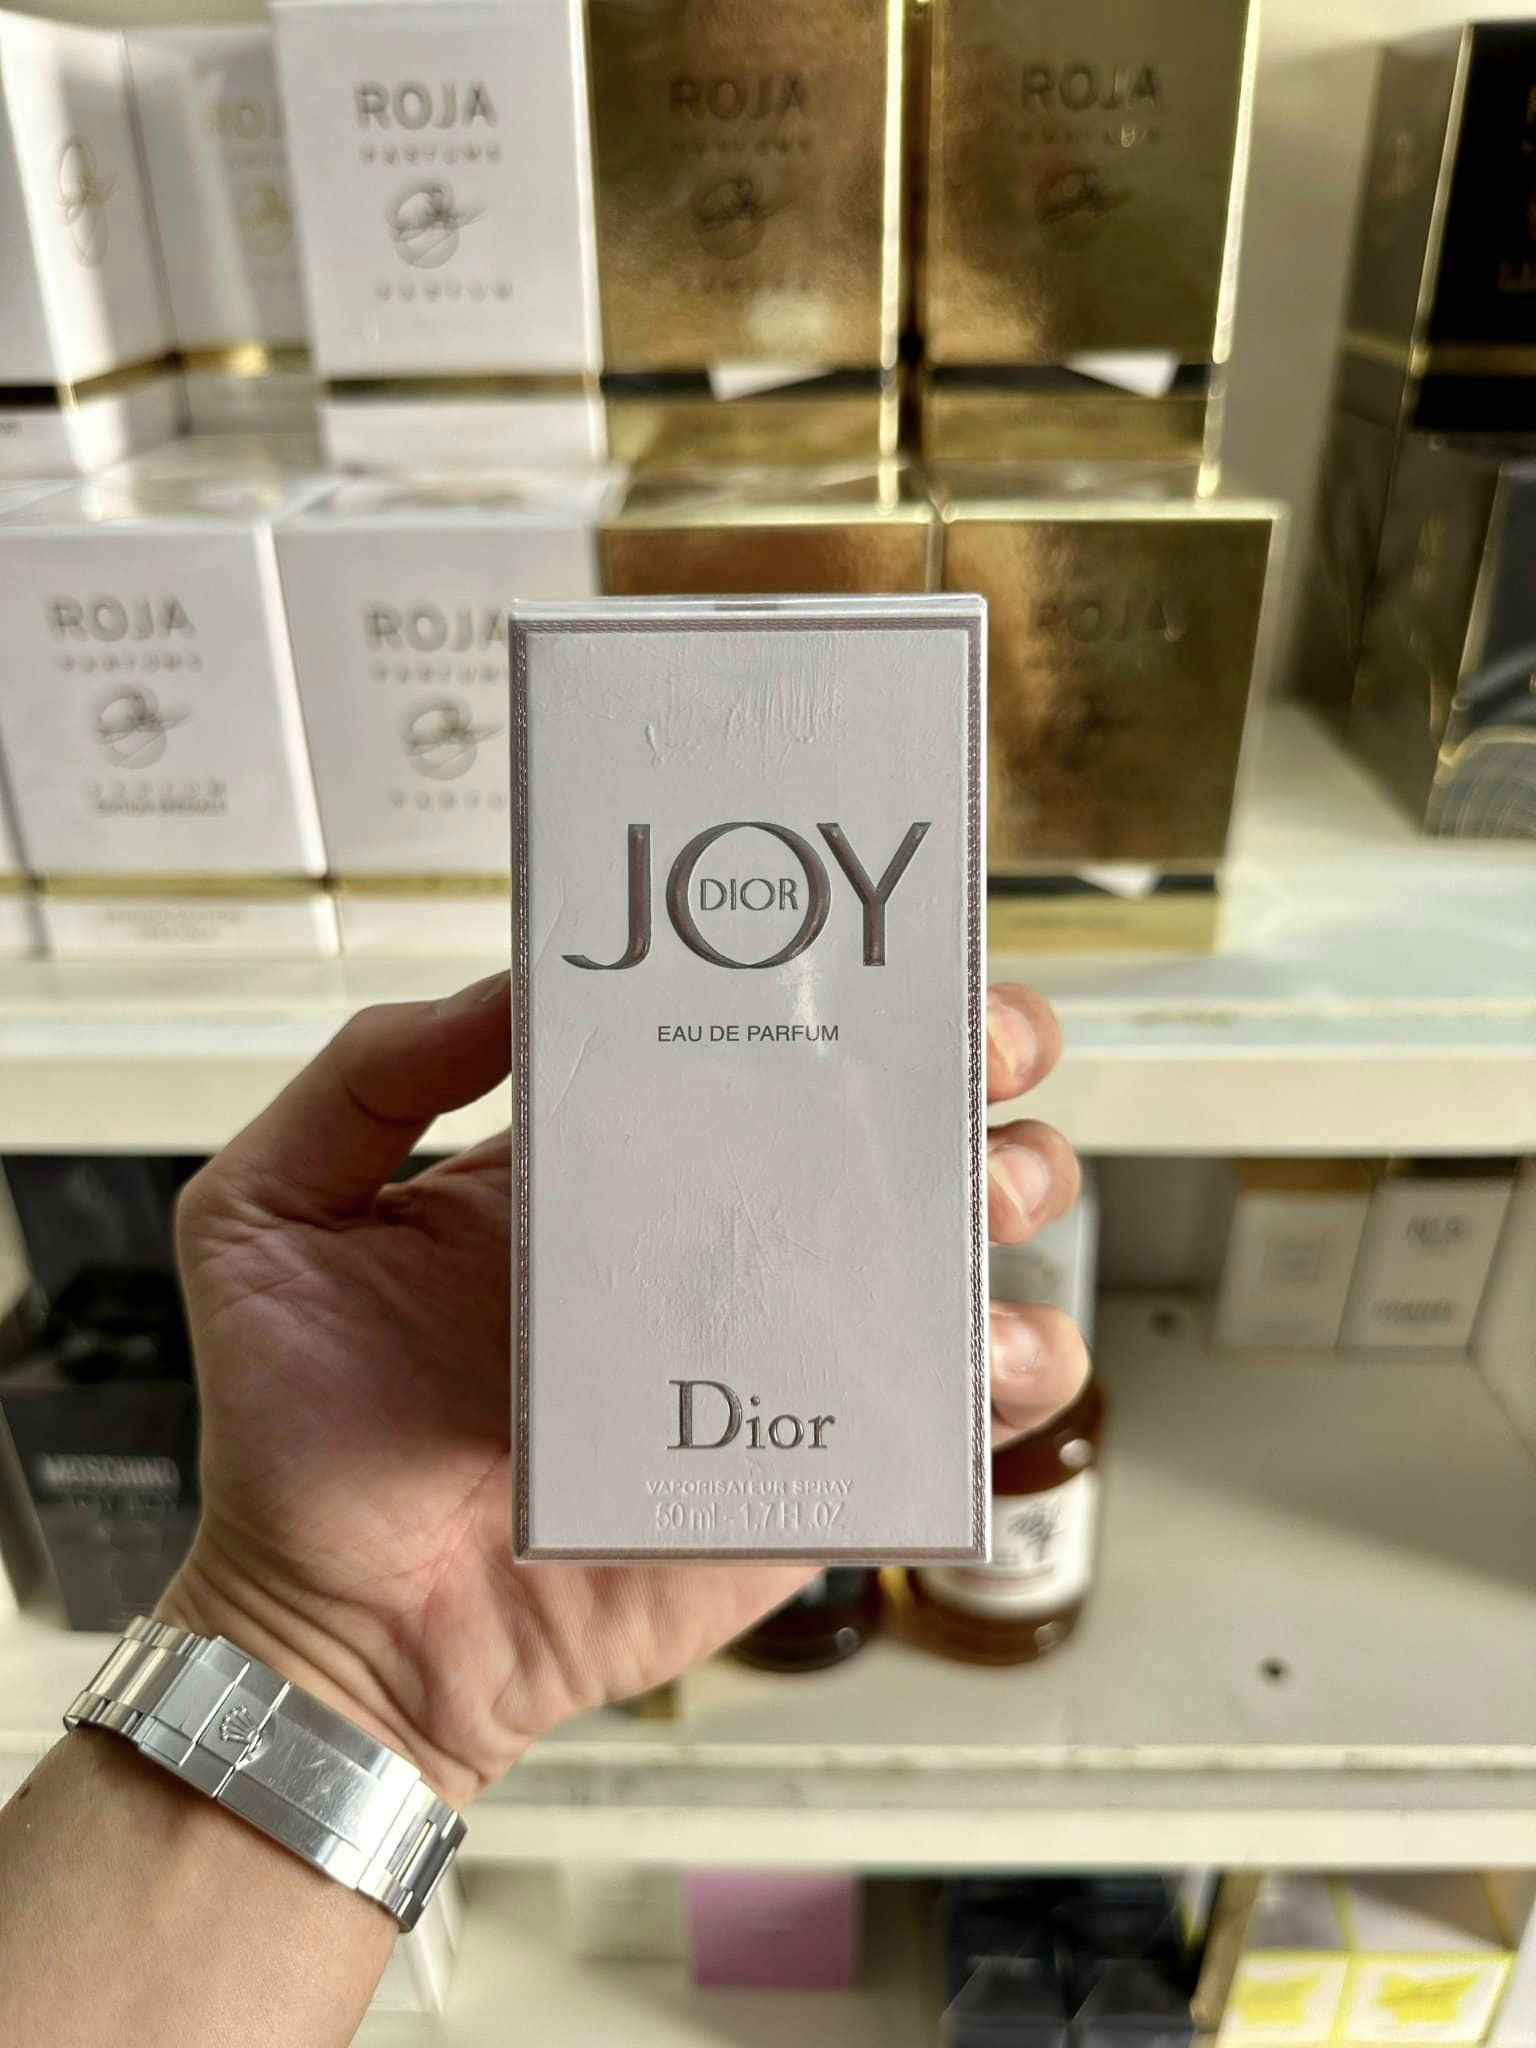 DIOR JOY by Dior Eau de Parfum 50ml